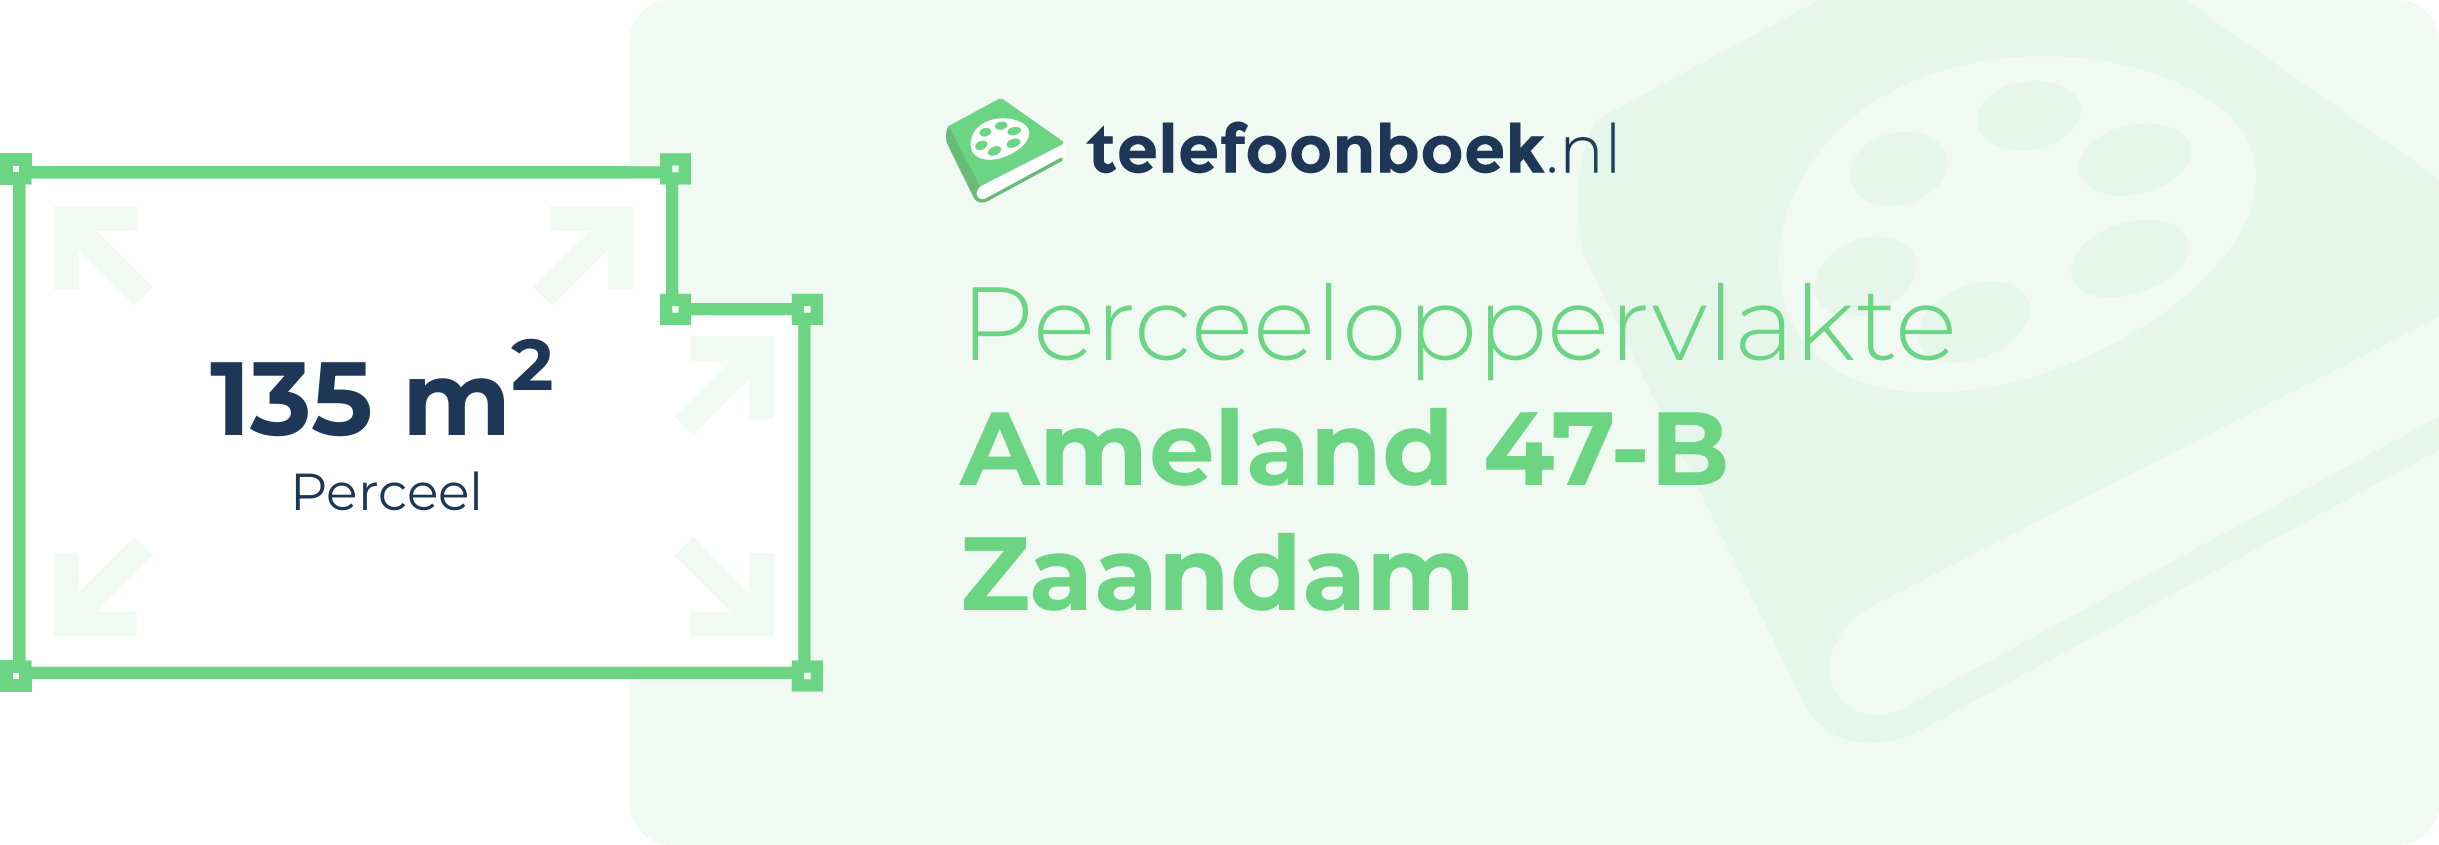 Perceeloppervlakte Ameland 47-B Zaandam